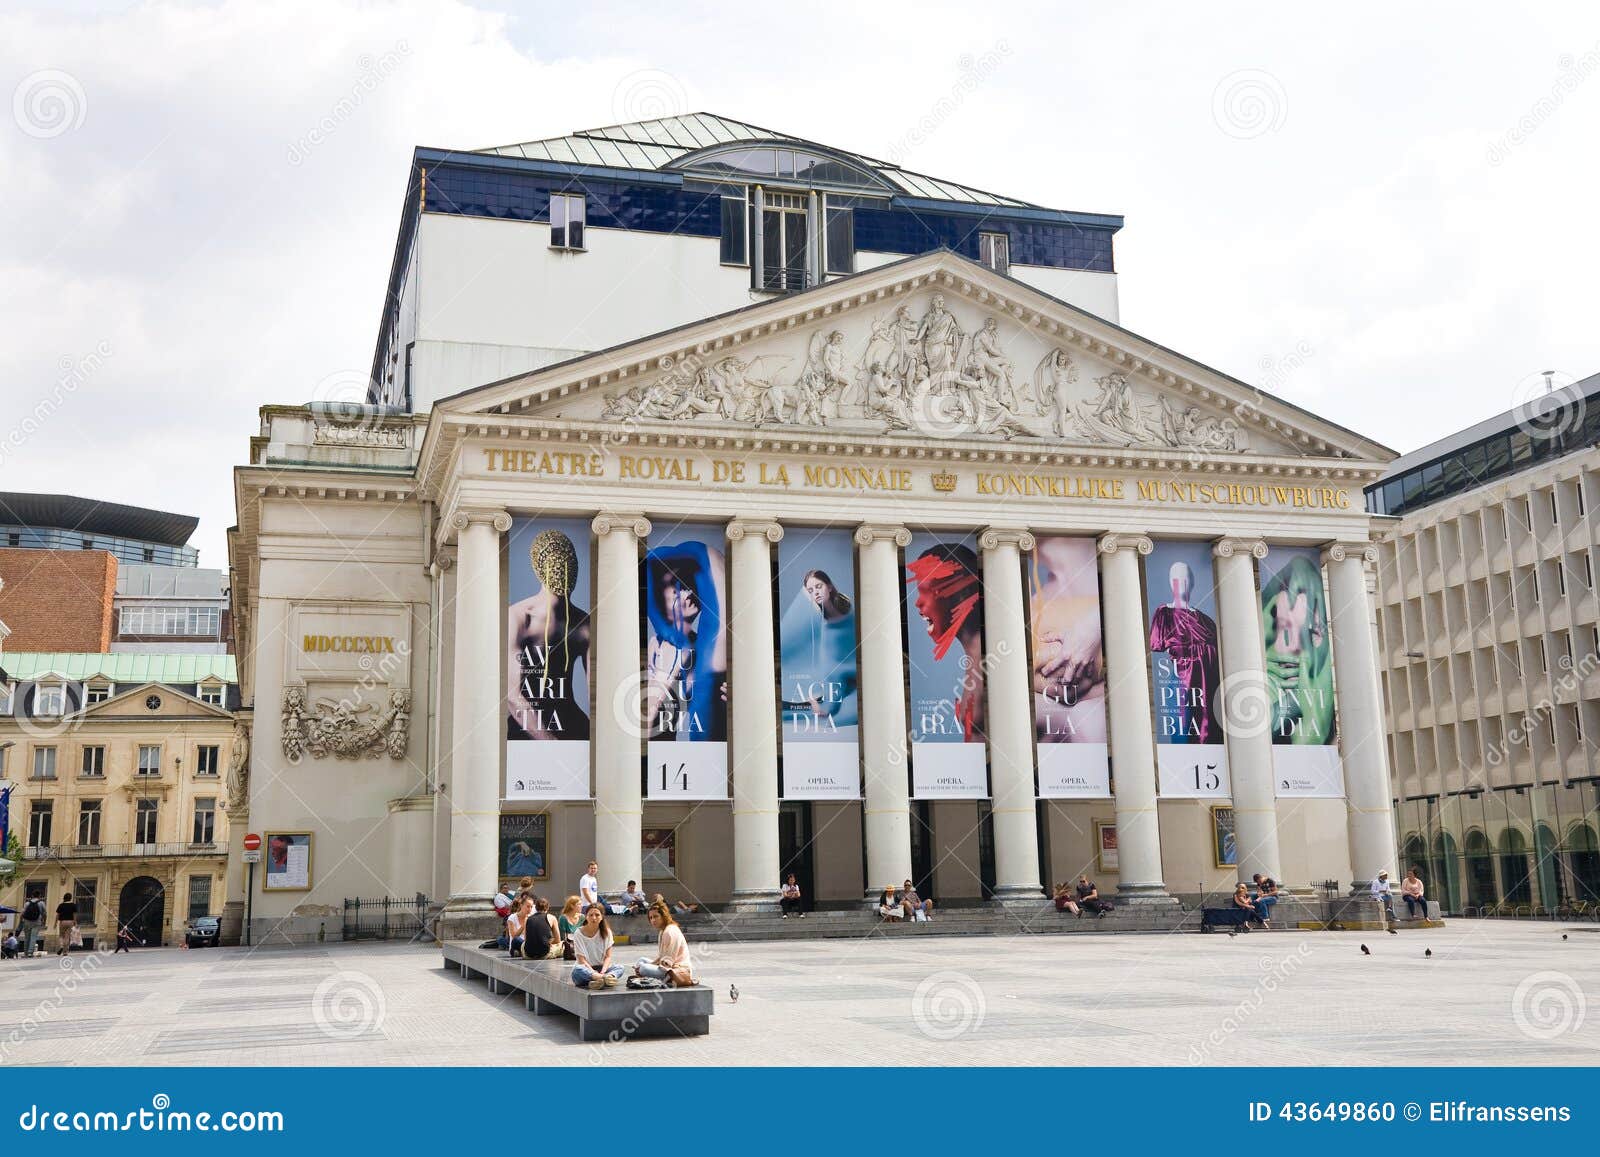 Royal Mint Theatre, Belgium Editorial Image - Image of munt, person:  43649860